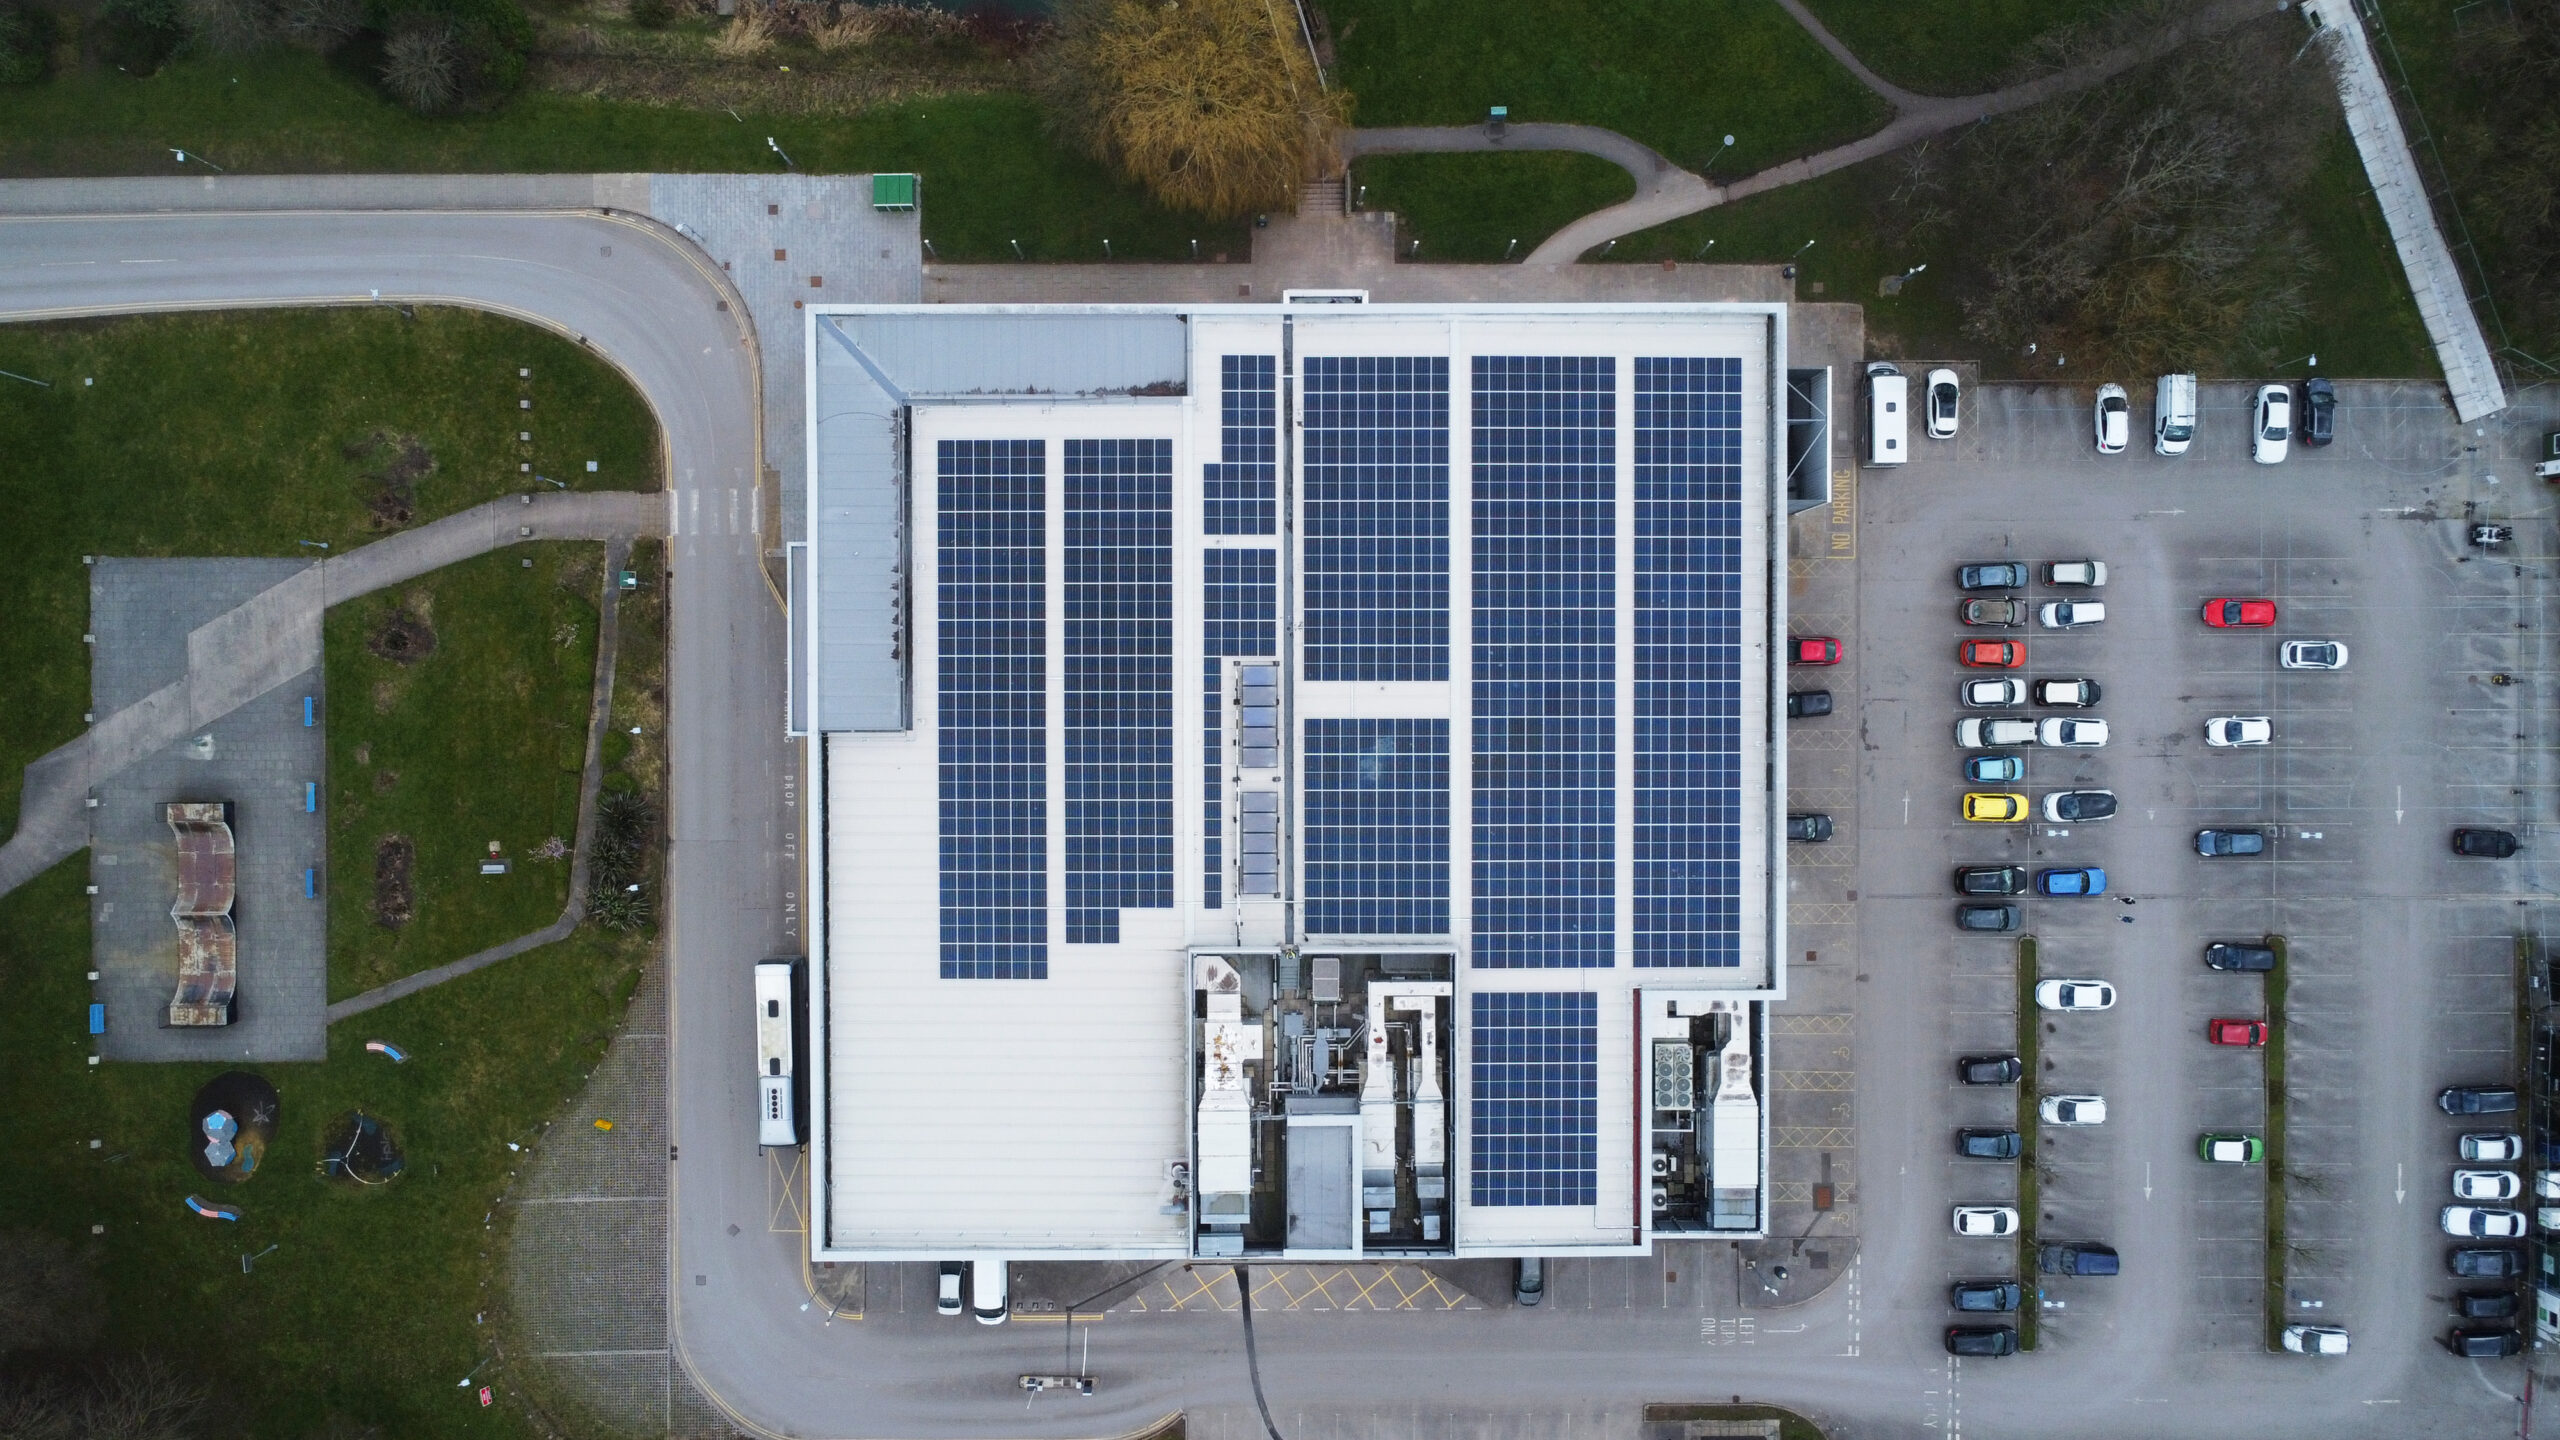 Winsford Leisure Centre Solar Panel System Photo 4